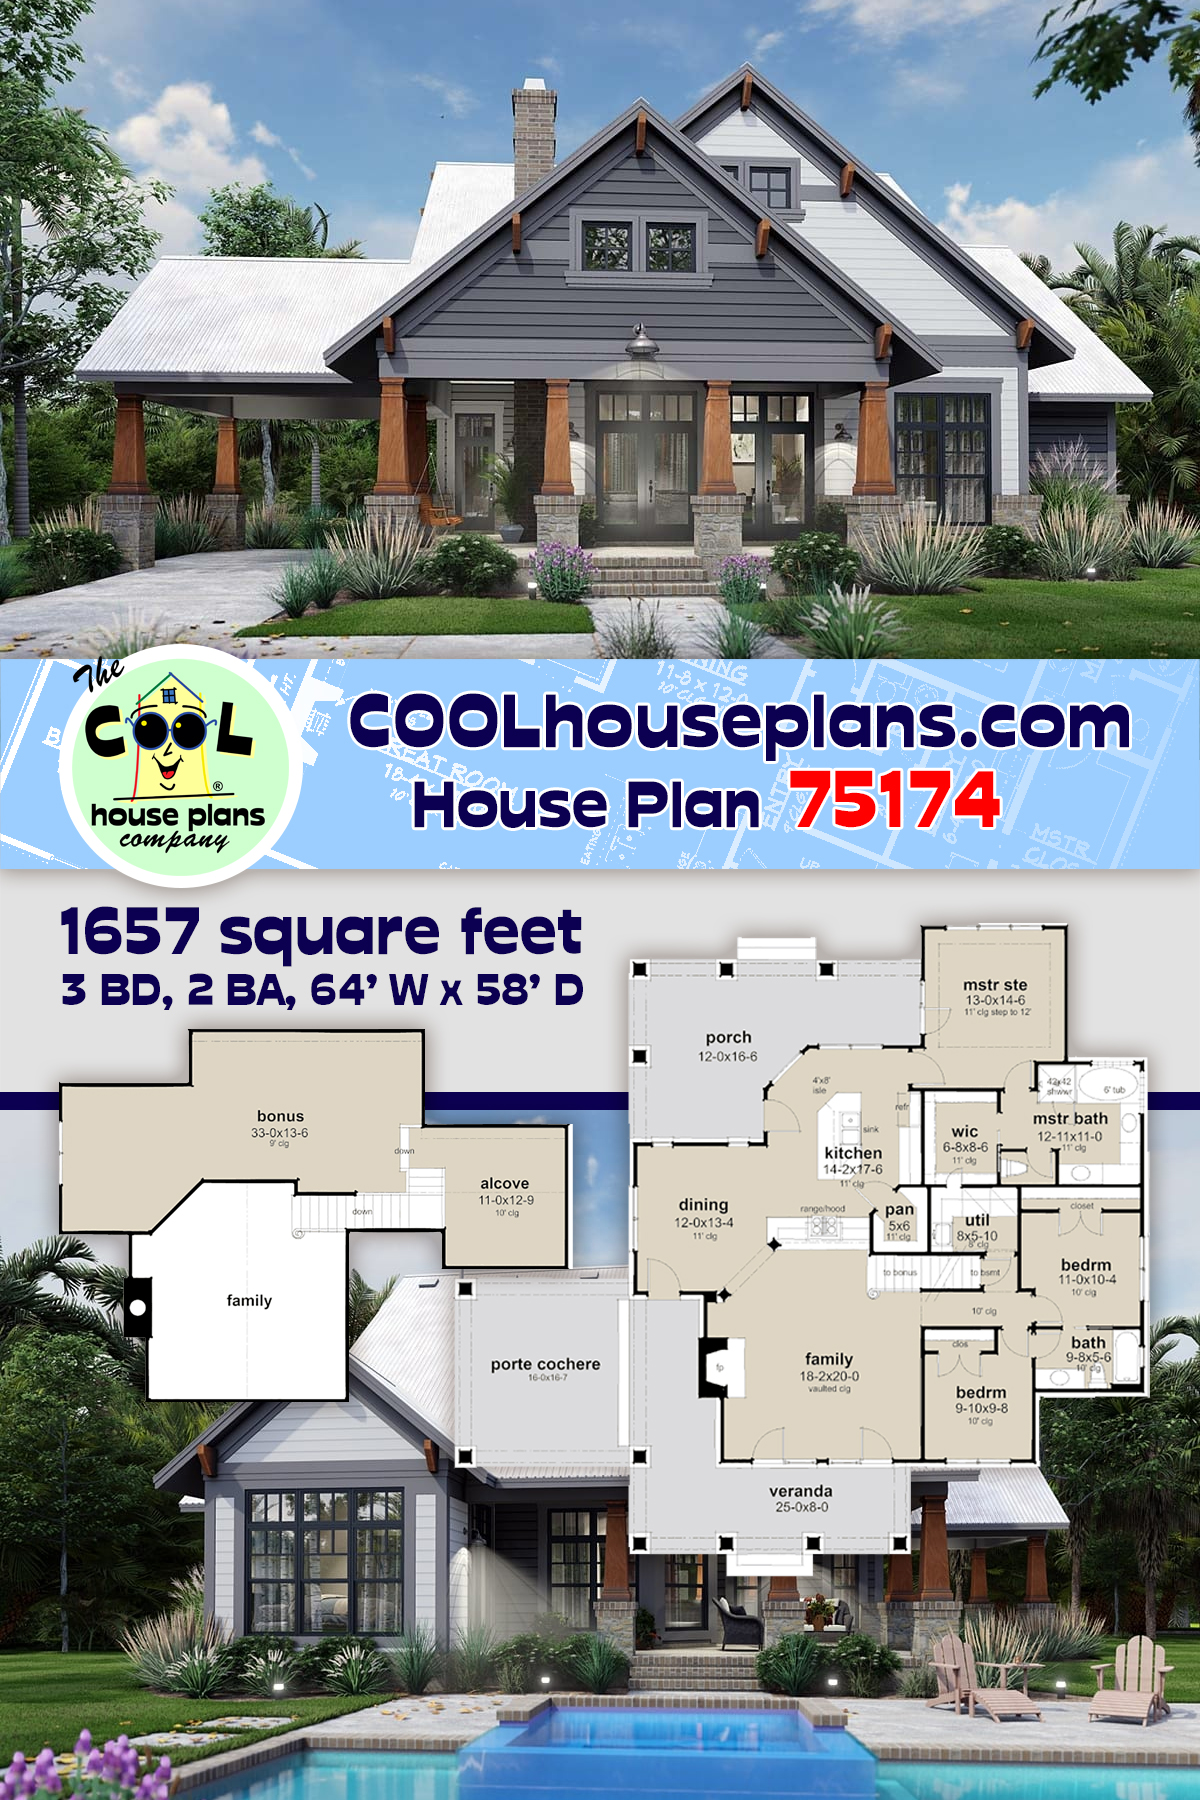 Cottage, Craftsman, Farmhouse House Plan 75174 with 3 Beds, 2 Baths, 2 Car Garage